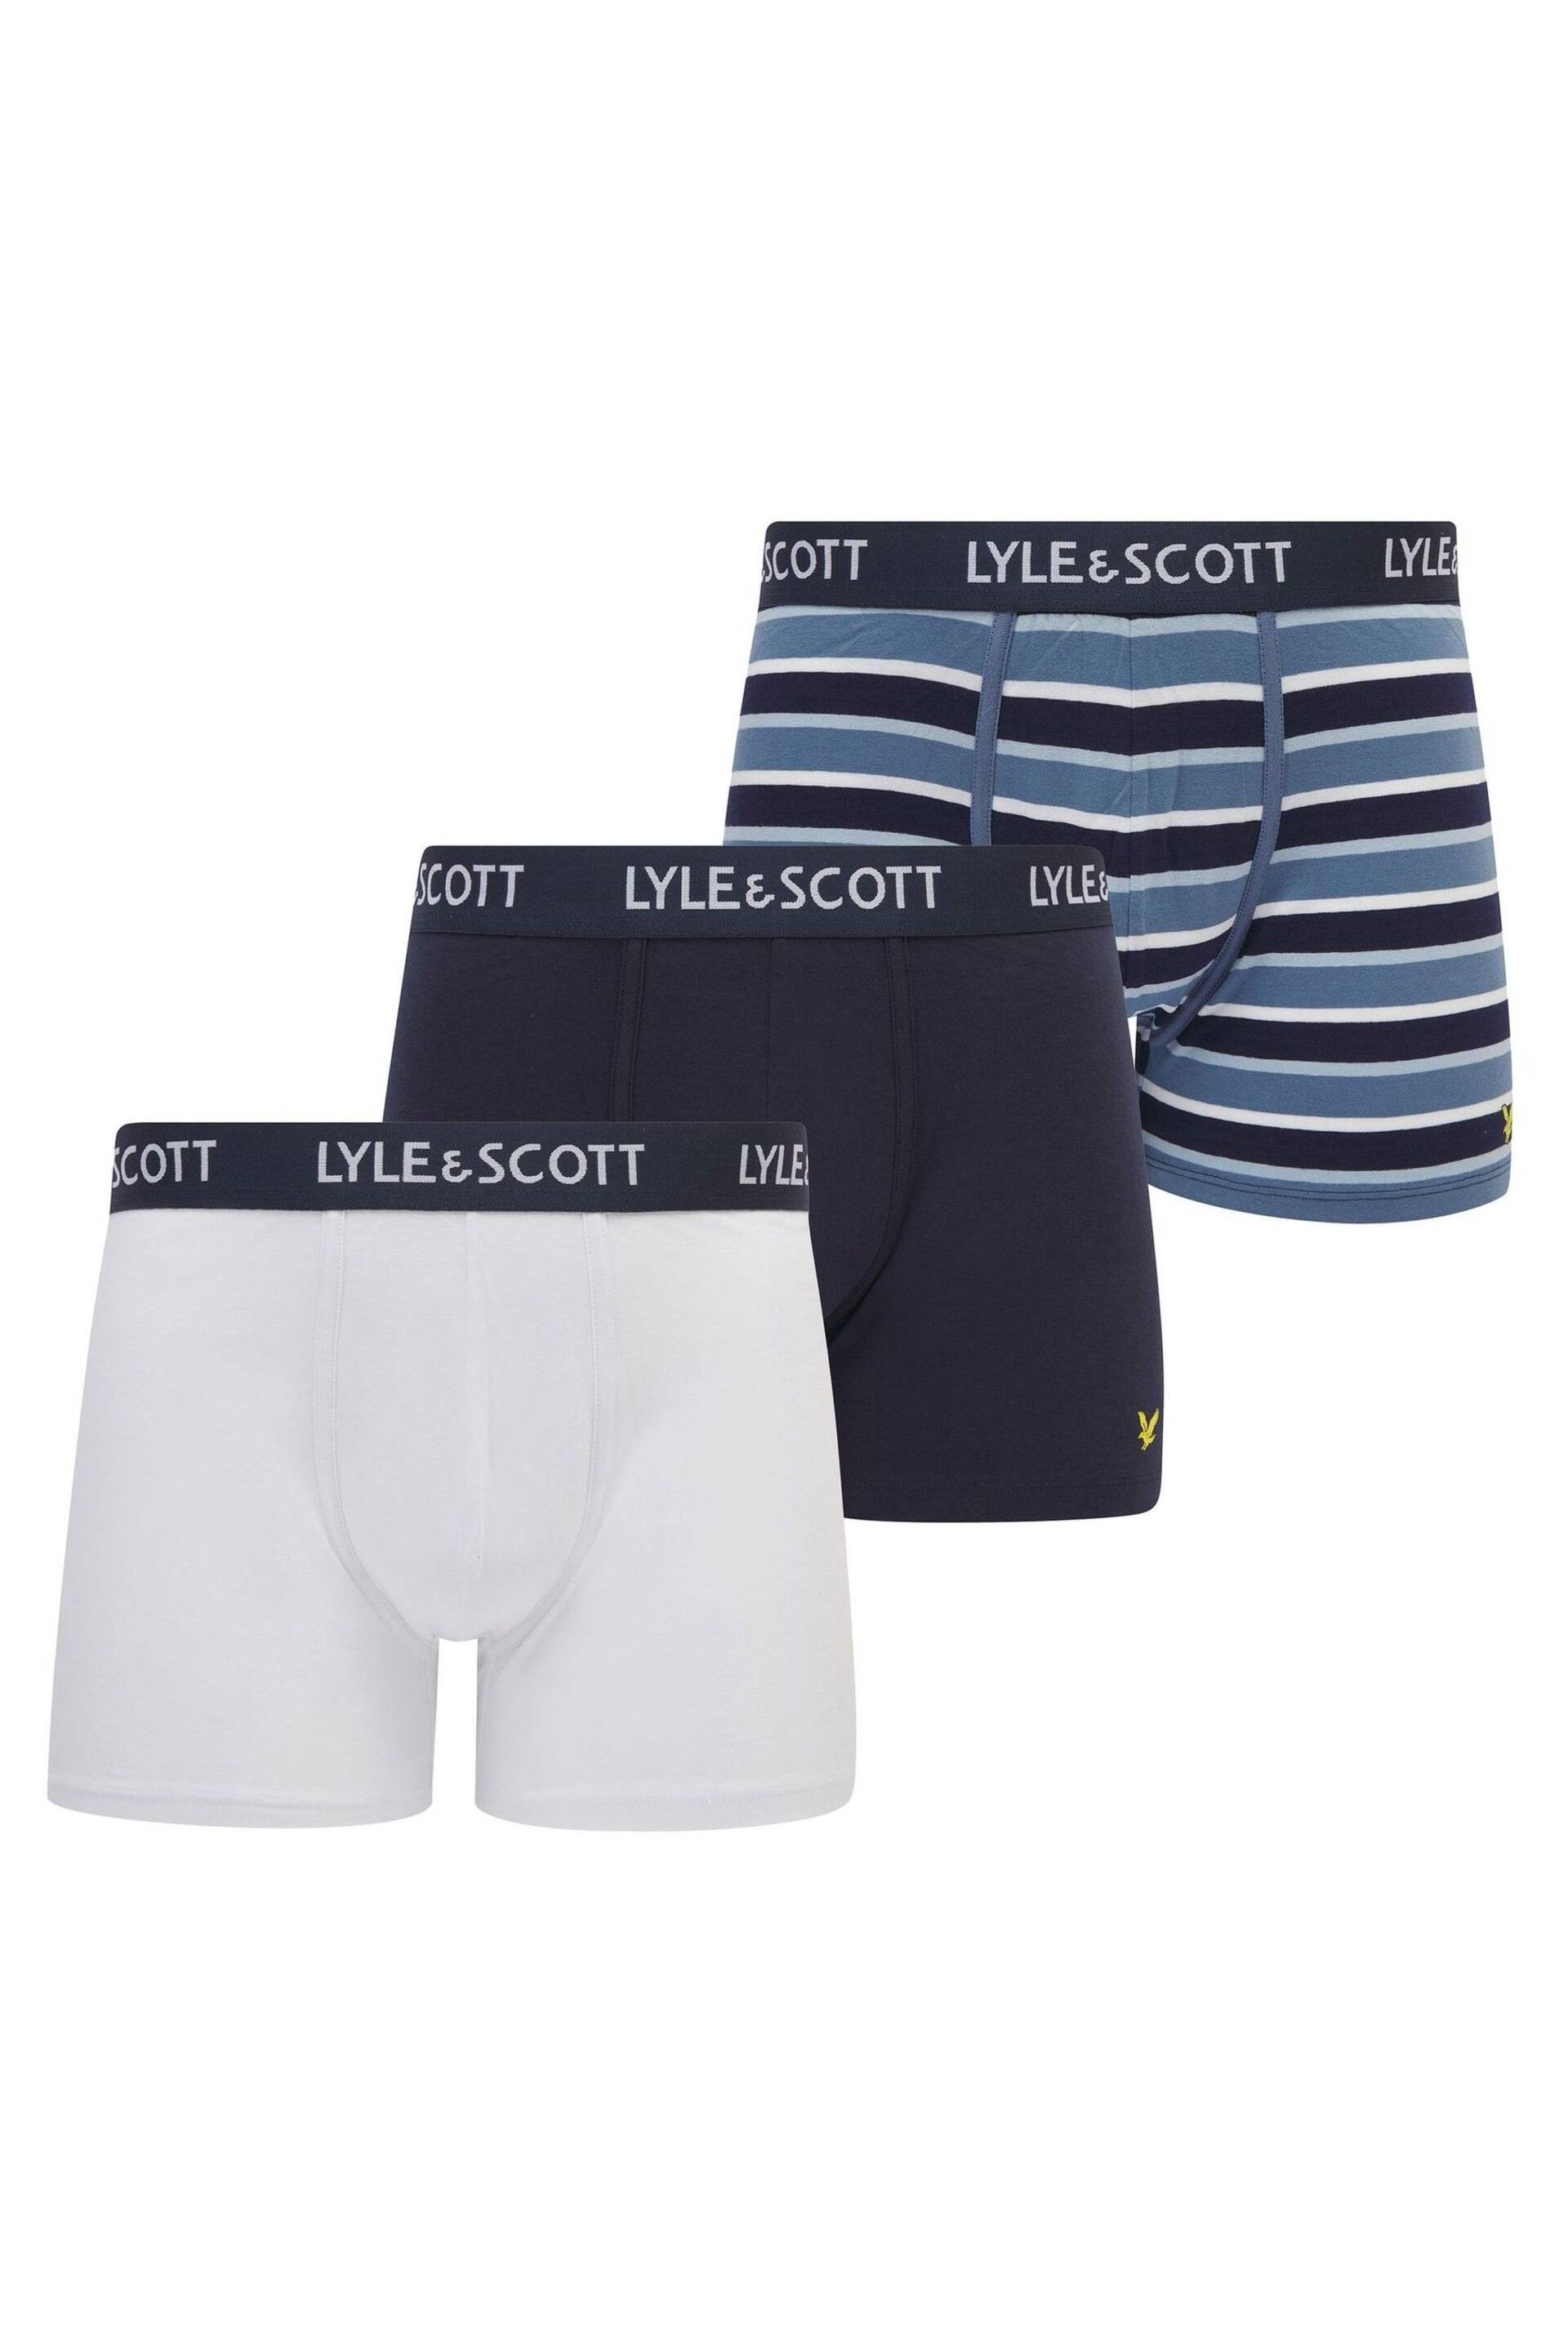 Lyle & Scott Ethan Premium White Underwear Trunks 3 Pack - Image 1 of 4